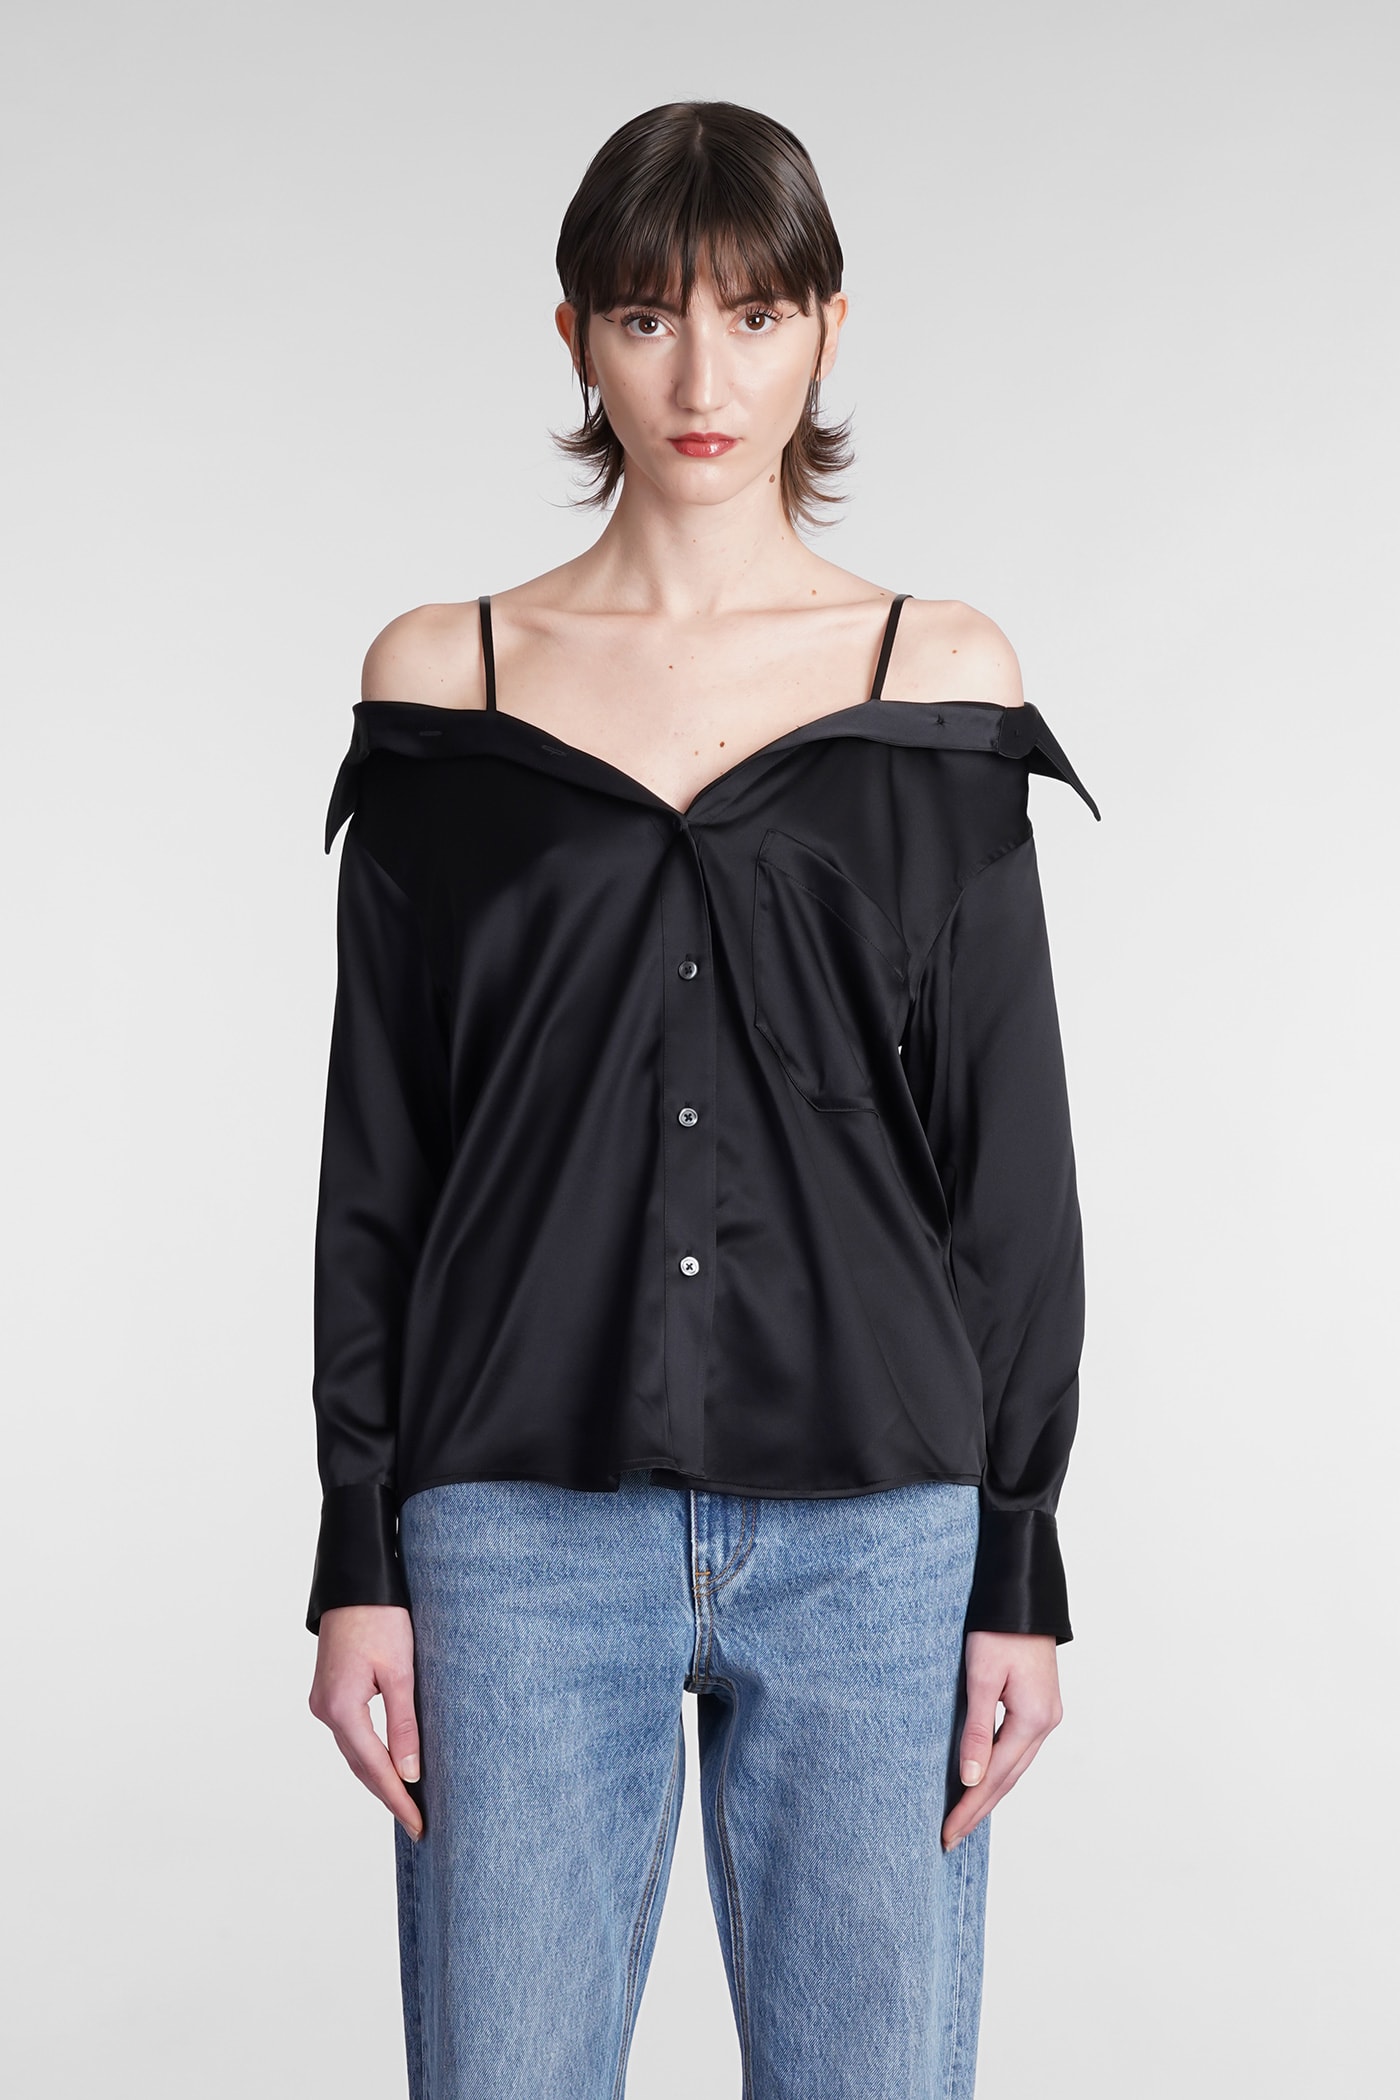 Alexander Wang Shirt In Black Silk